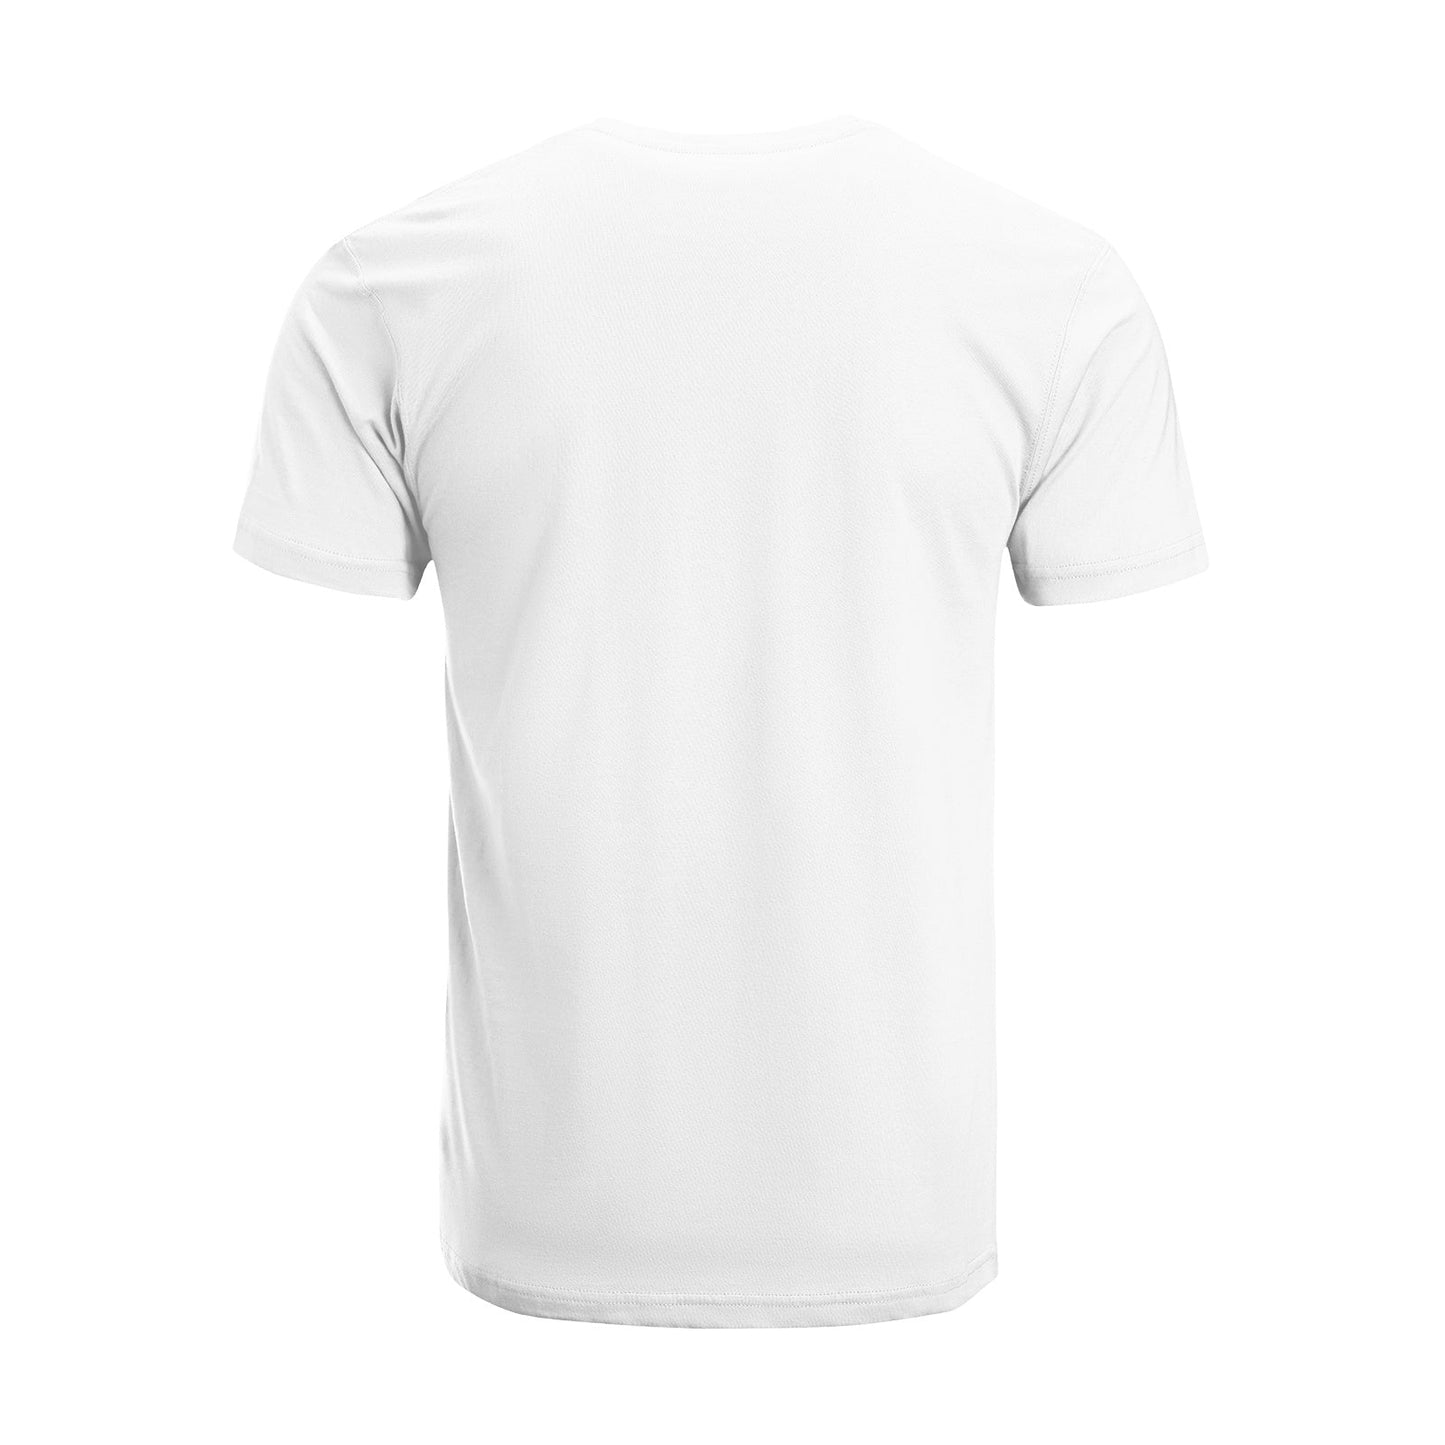 Unisex Short Sleeve Crew Neck Cotton Jersey T-Shirt Gym No. 46 - Tara-Outfits.com